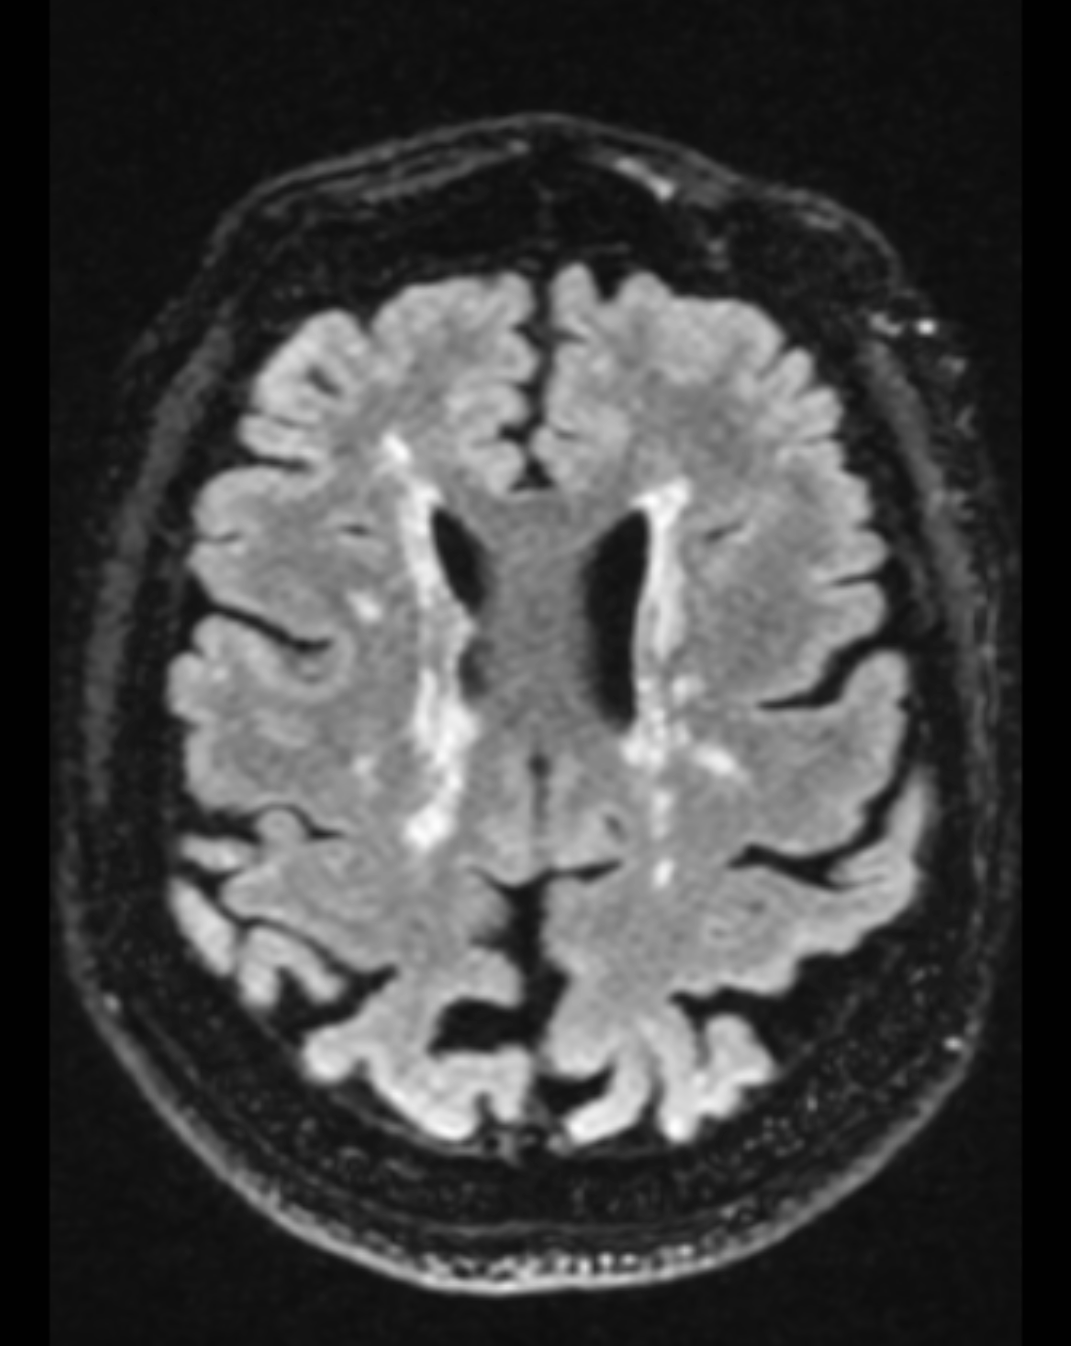 <p>Axial FLAIR Sequence Demonstrating an Advanced Lesion Burden on MRI